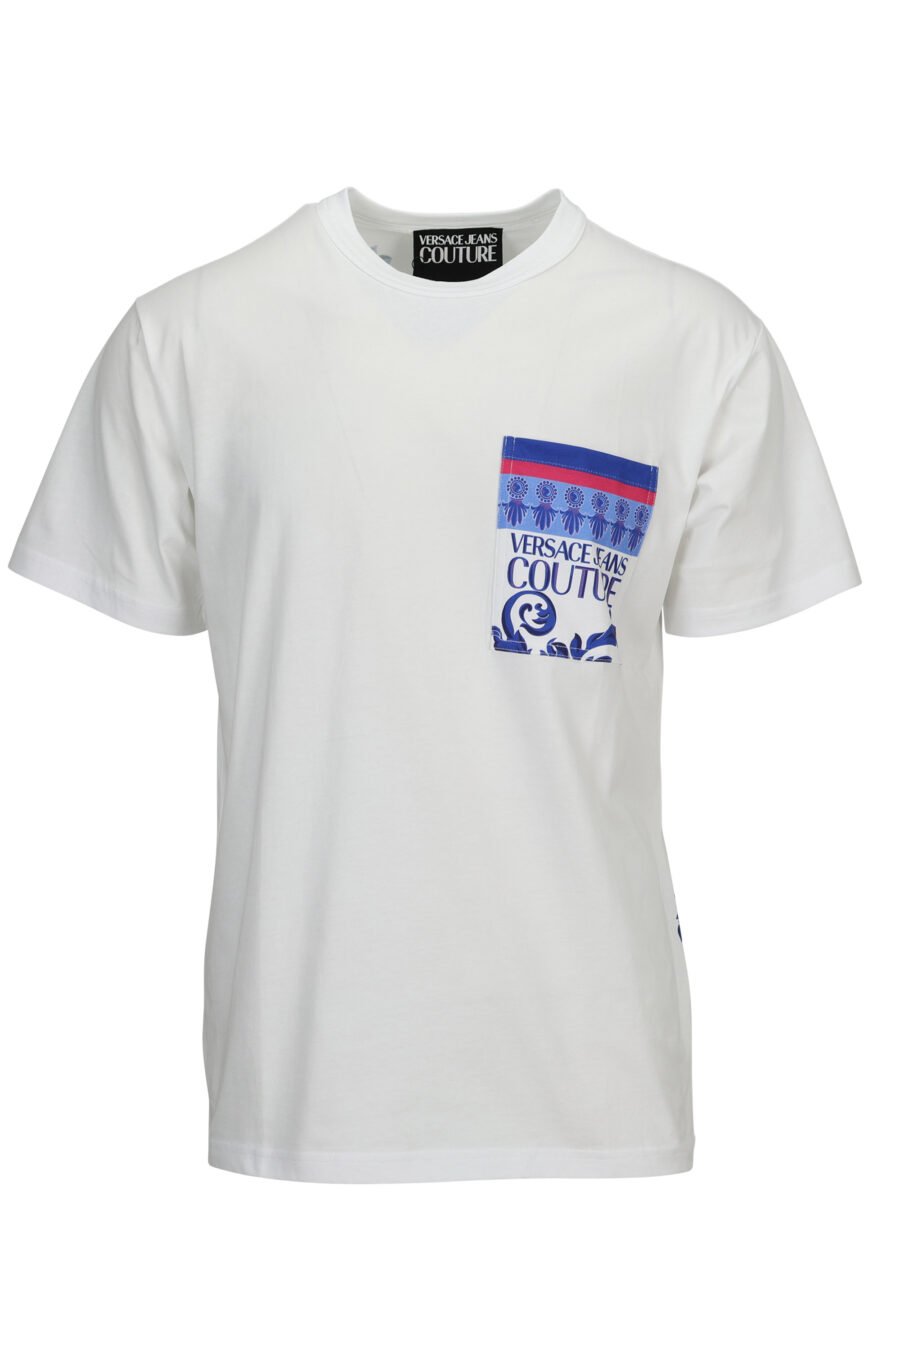 T-shirt blanc avec poche logo baroque bleu - 8052019611250